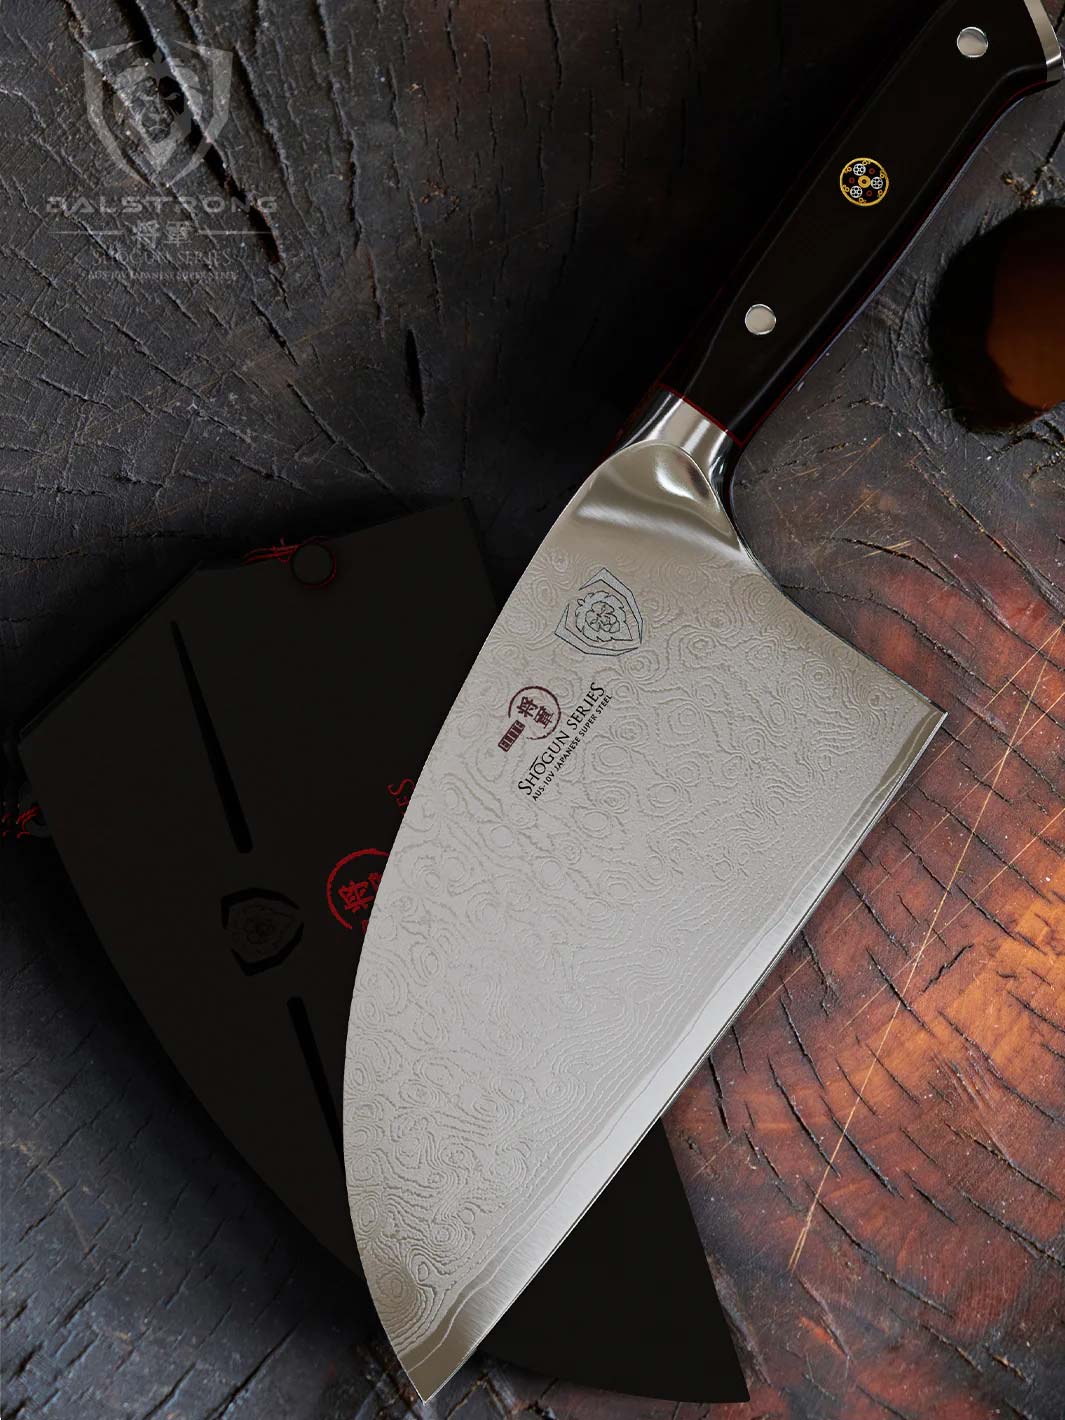 Santoku Knife 7 | Shogun Series ELITE | Dalstrong ©